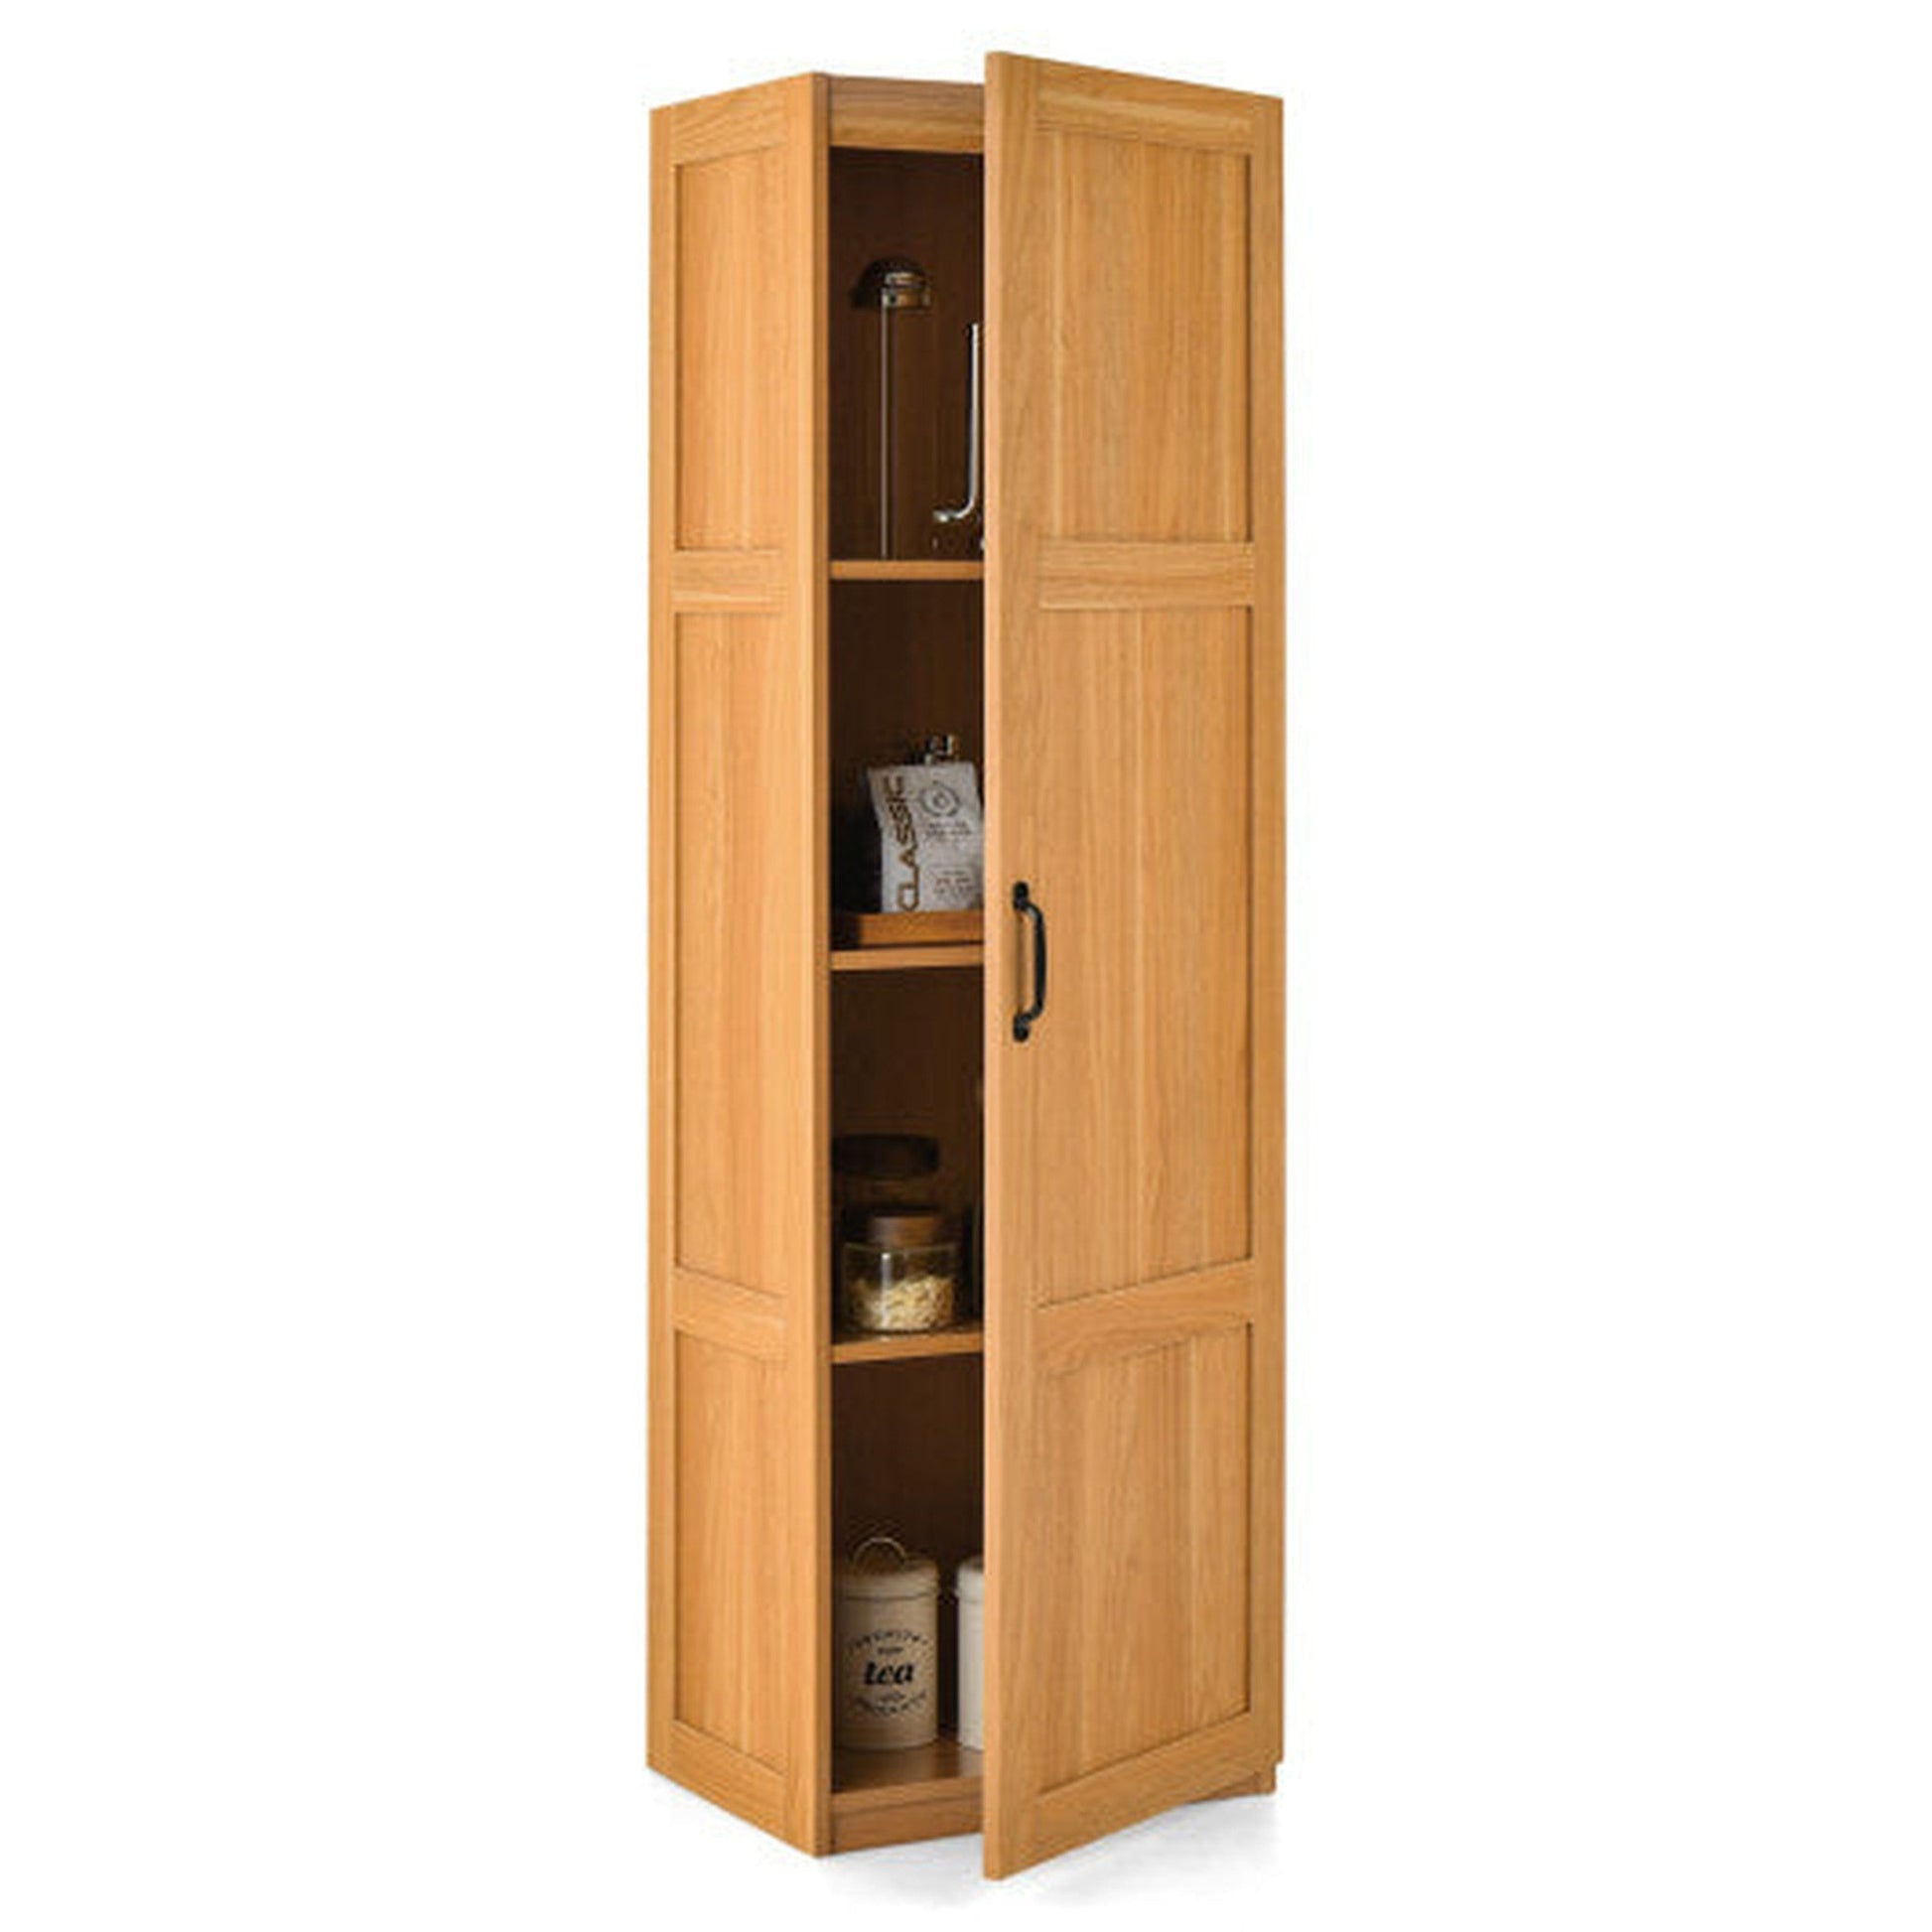 Costway Bathroom Wood Organizer Shelf Storage Rack with Cabinet